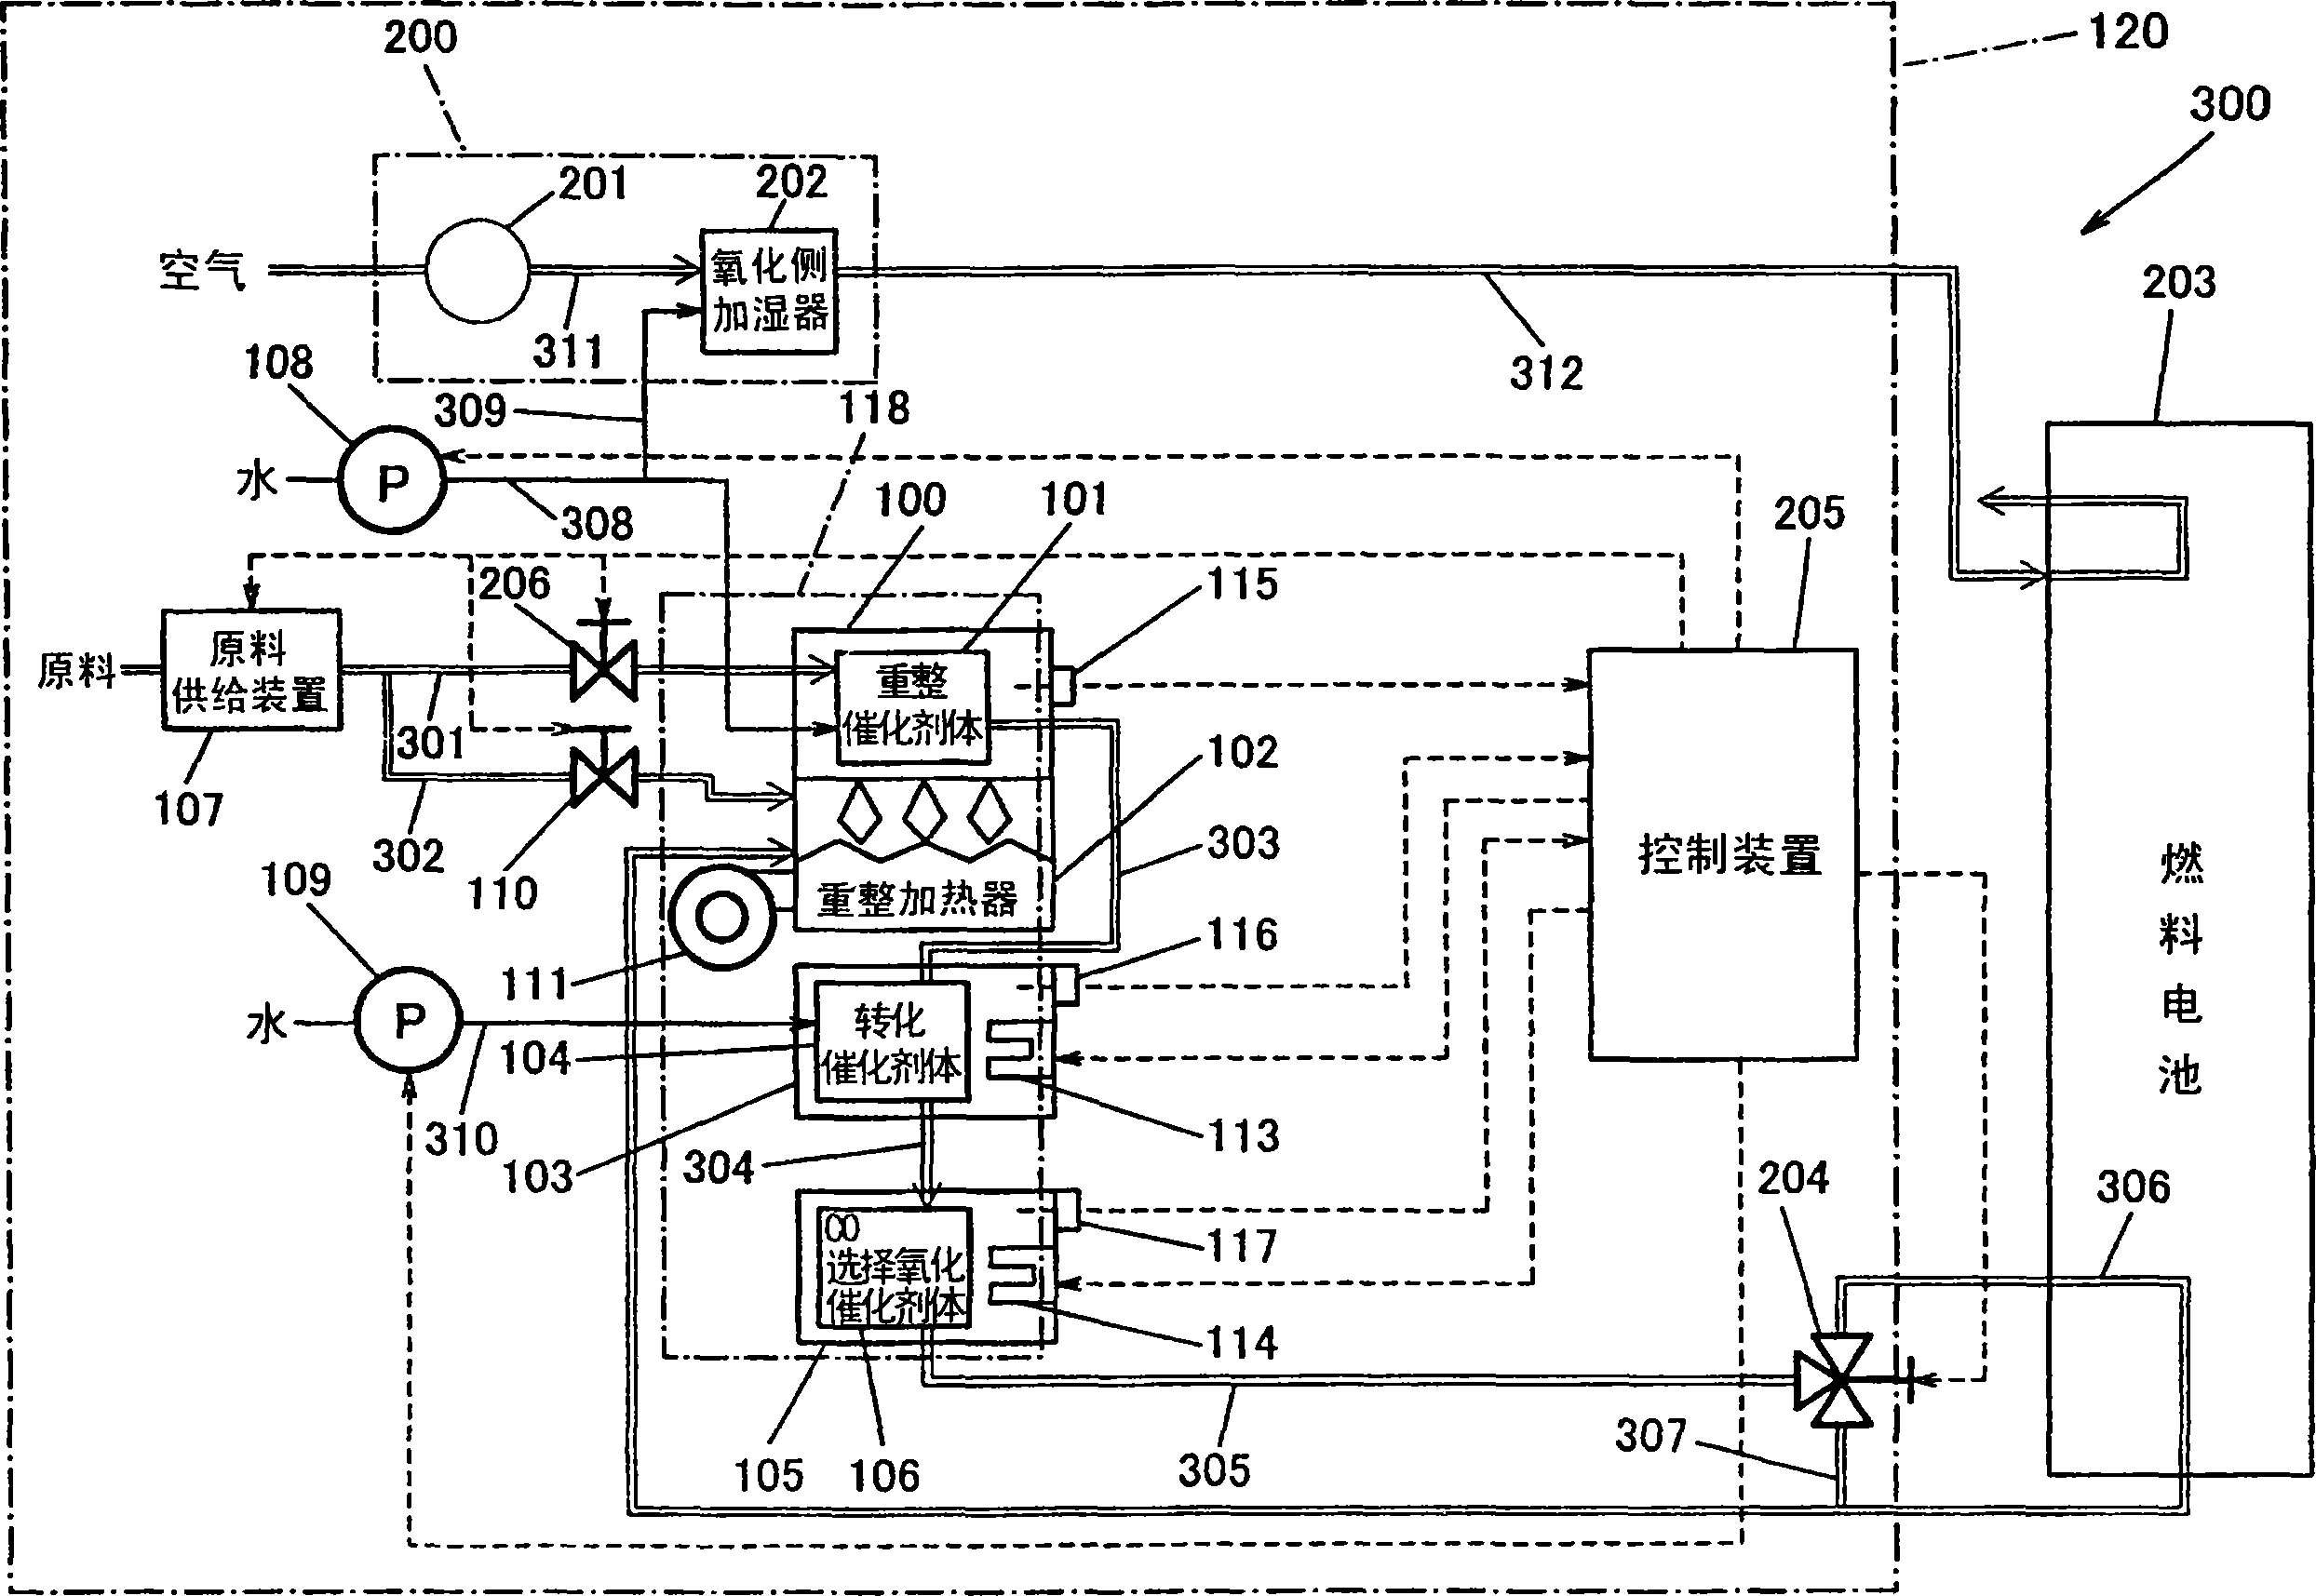 Hydrogen production apparatus, method of operating hydrogen production apparatus, fuel cell system and method of operating fuel cell system